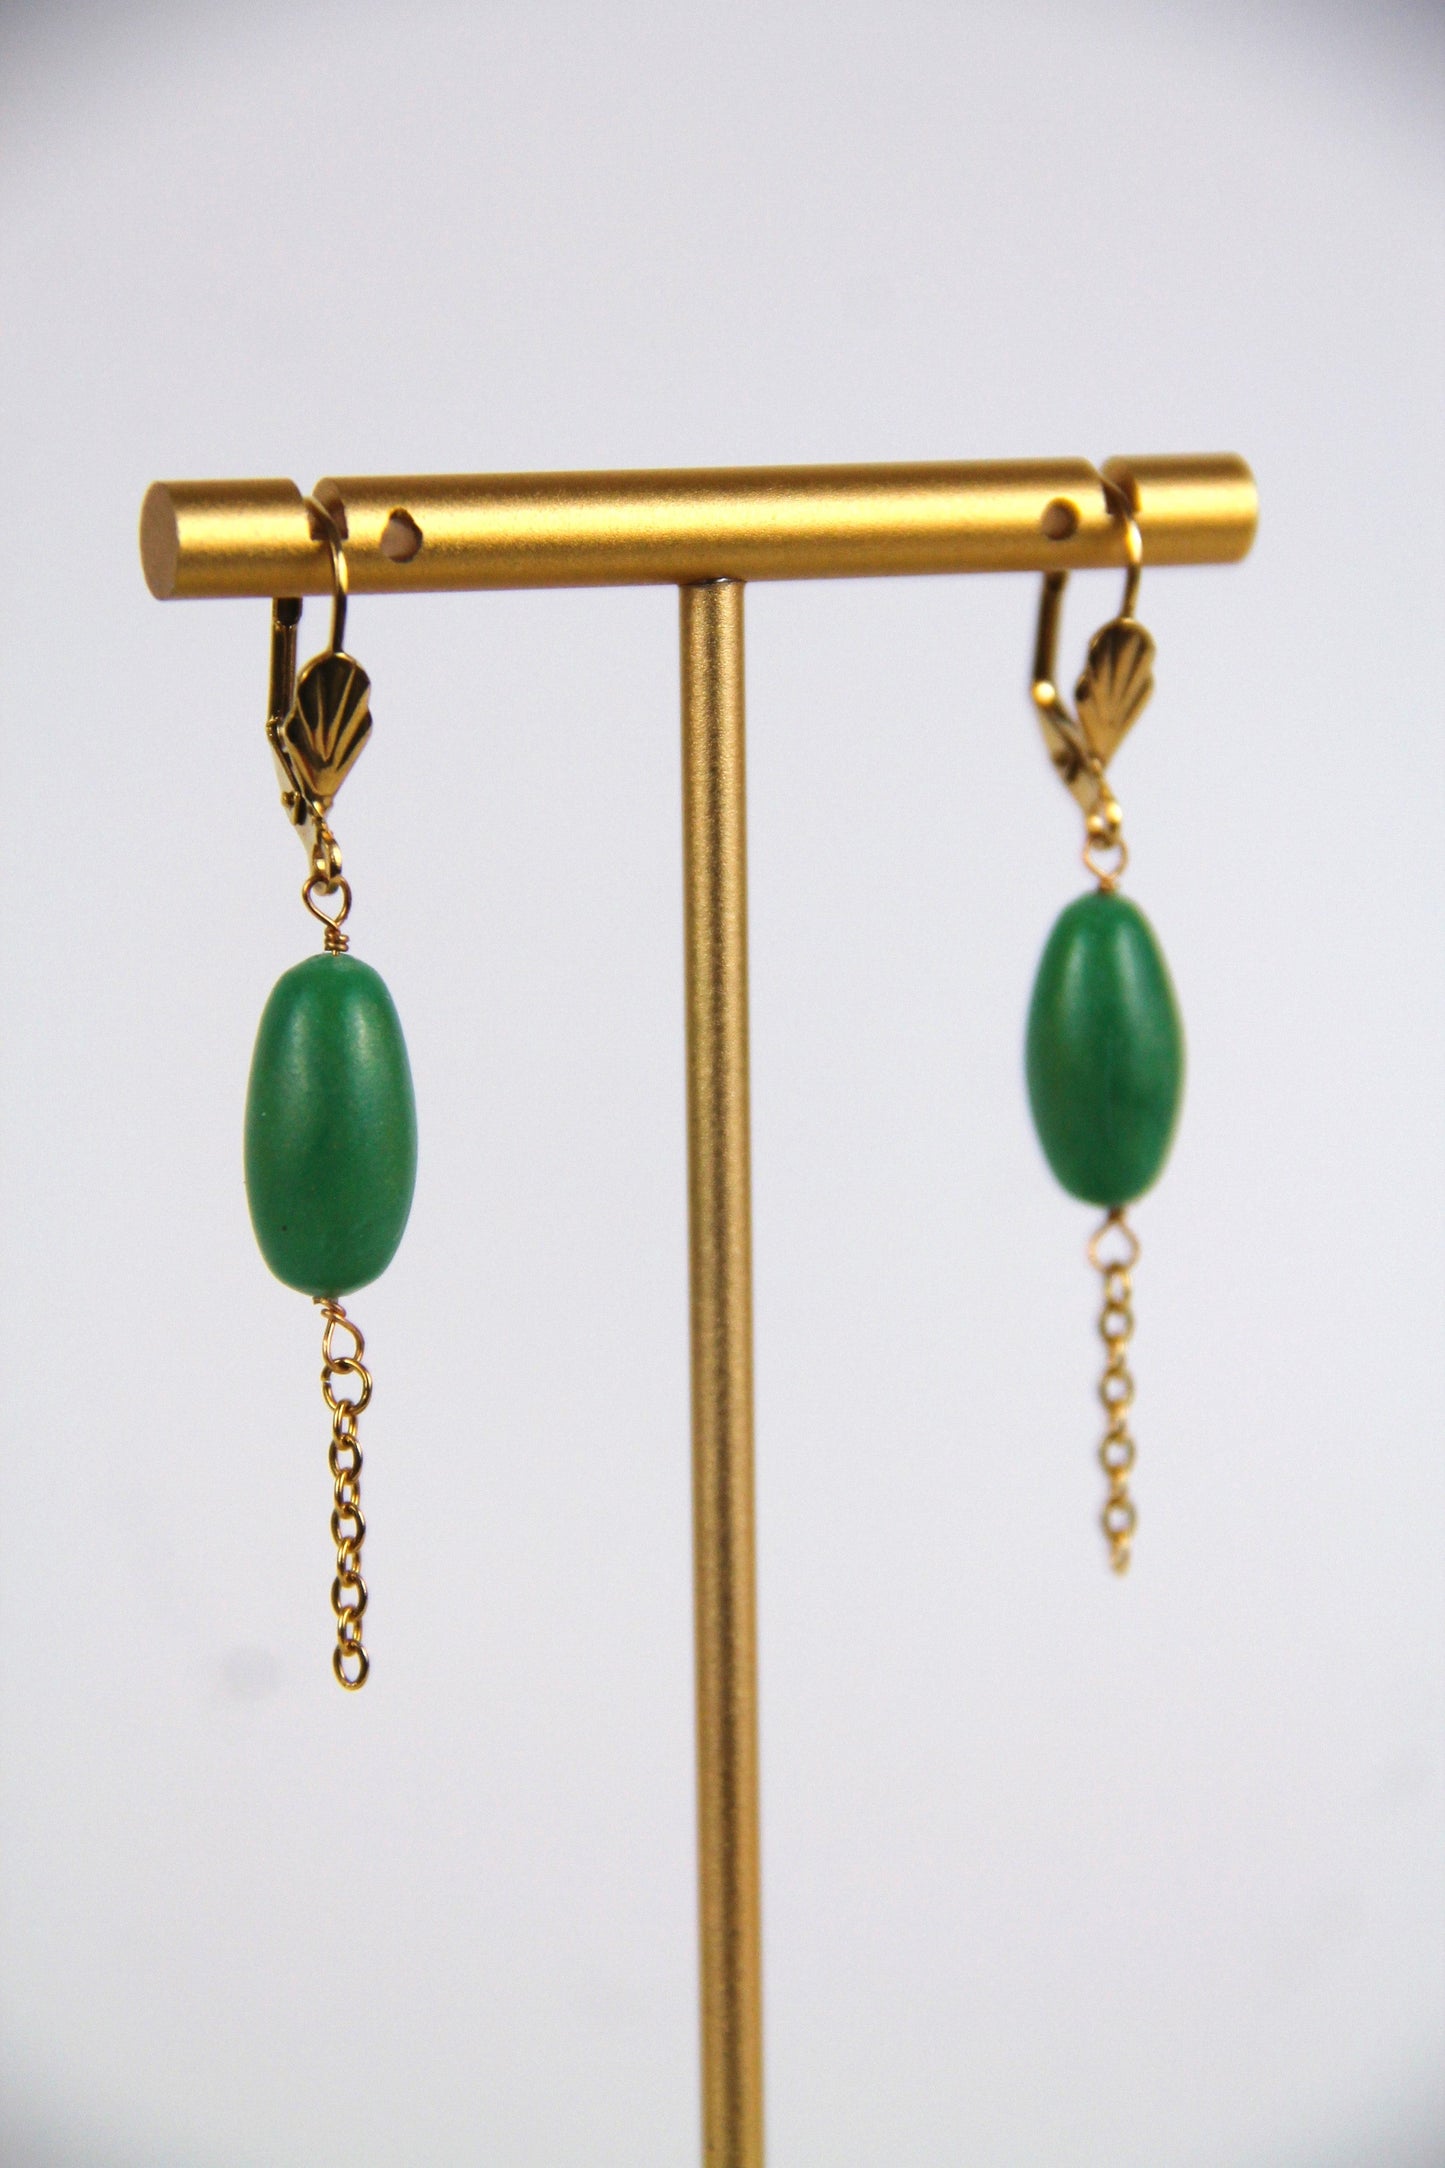 EMI bead earrings - Jade green